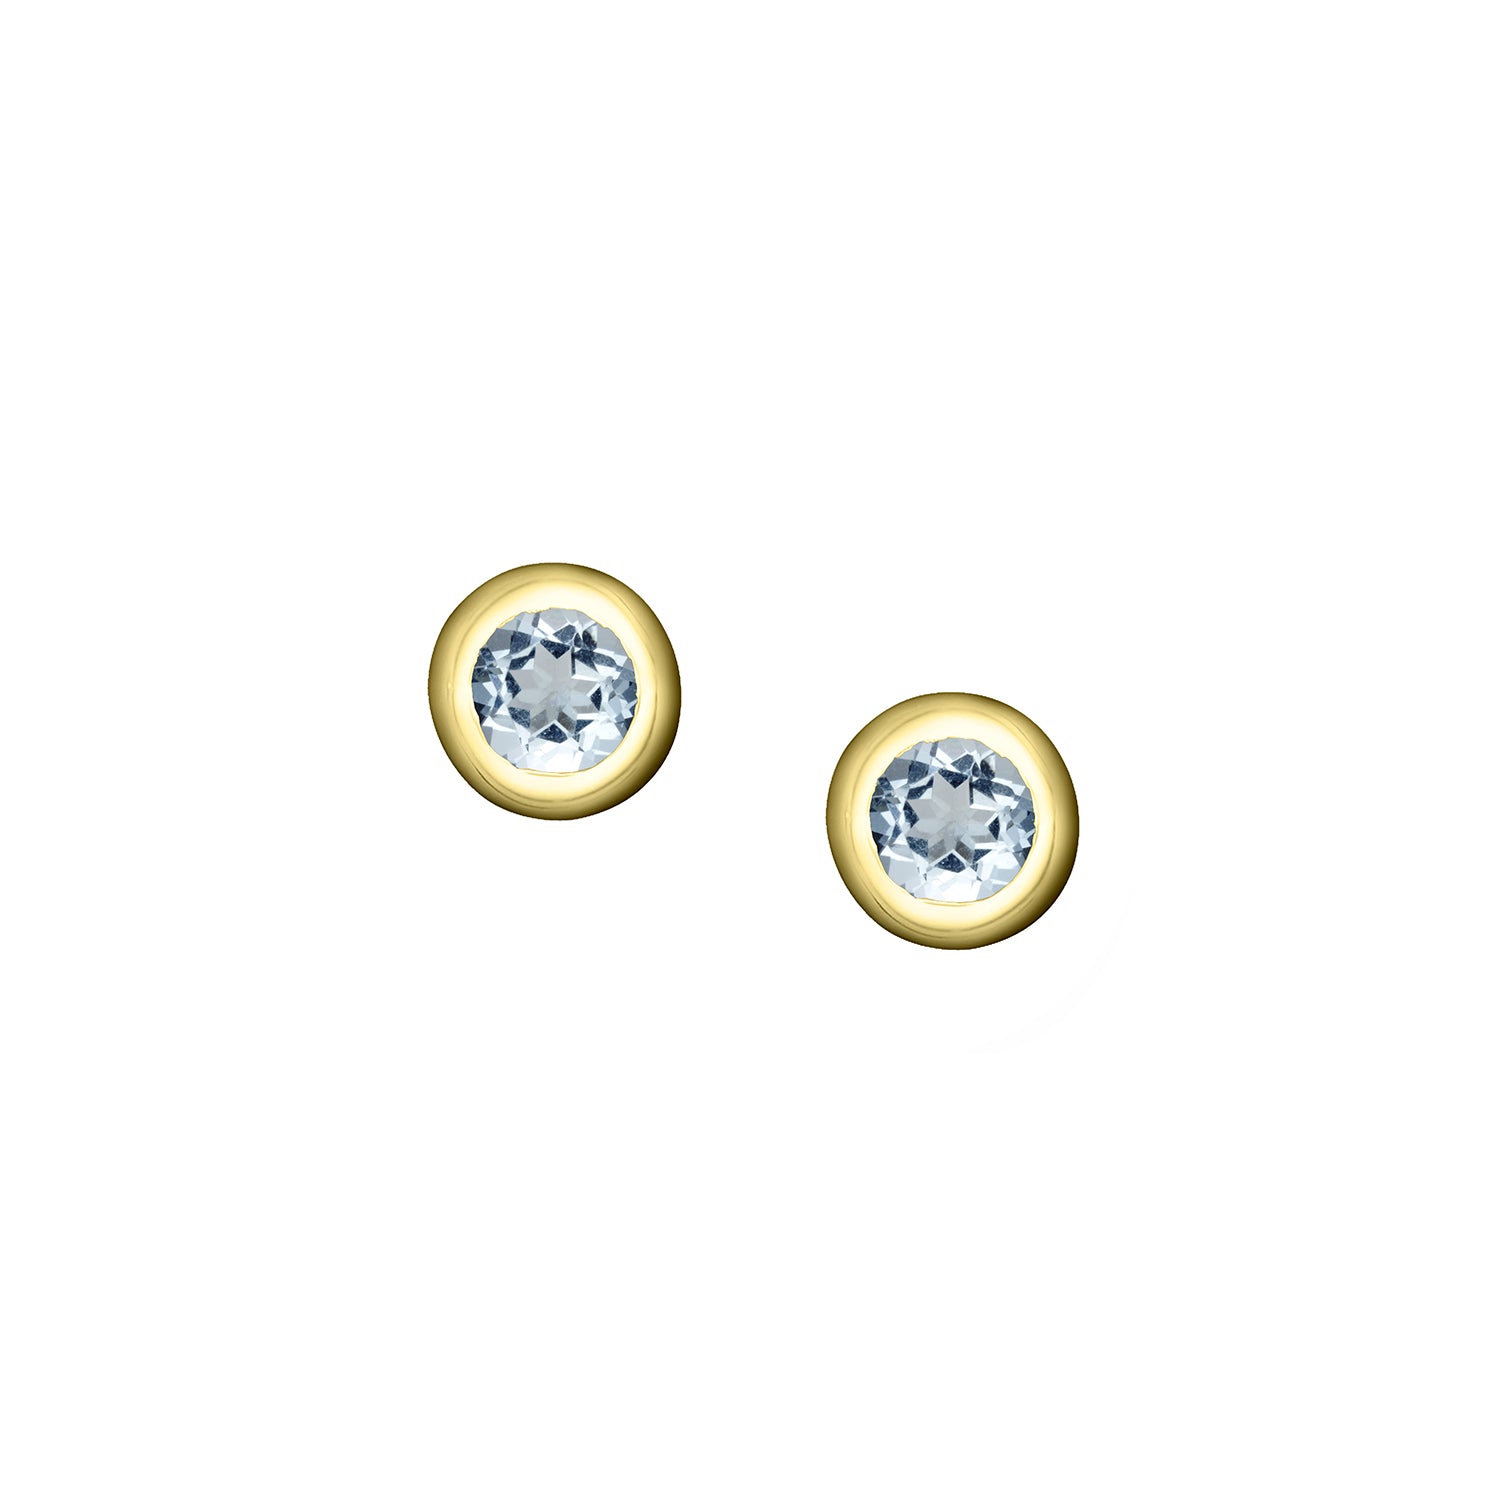 Polished Gold Vermeil Crescent Moon Birthstone Earrings - March / Aquamarine